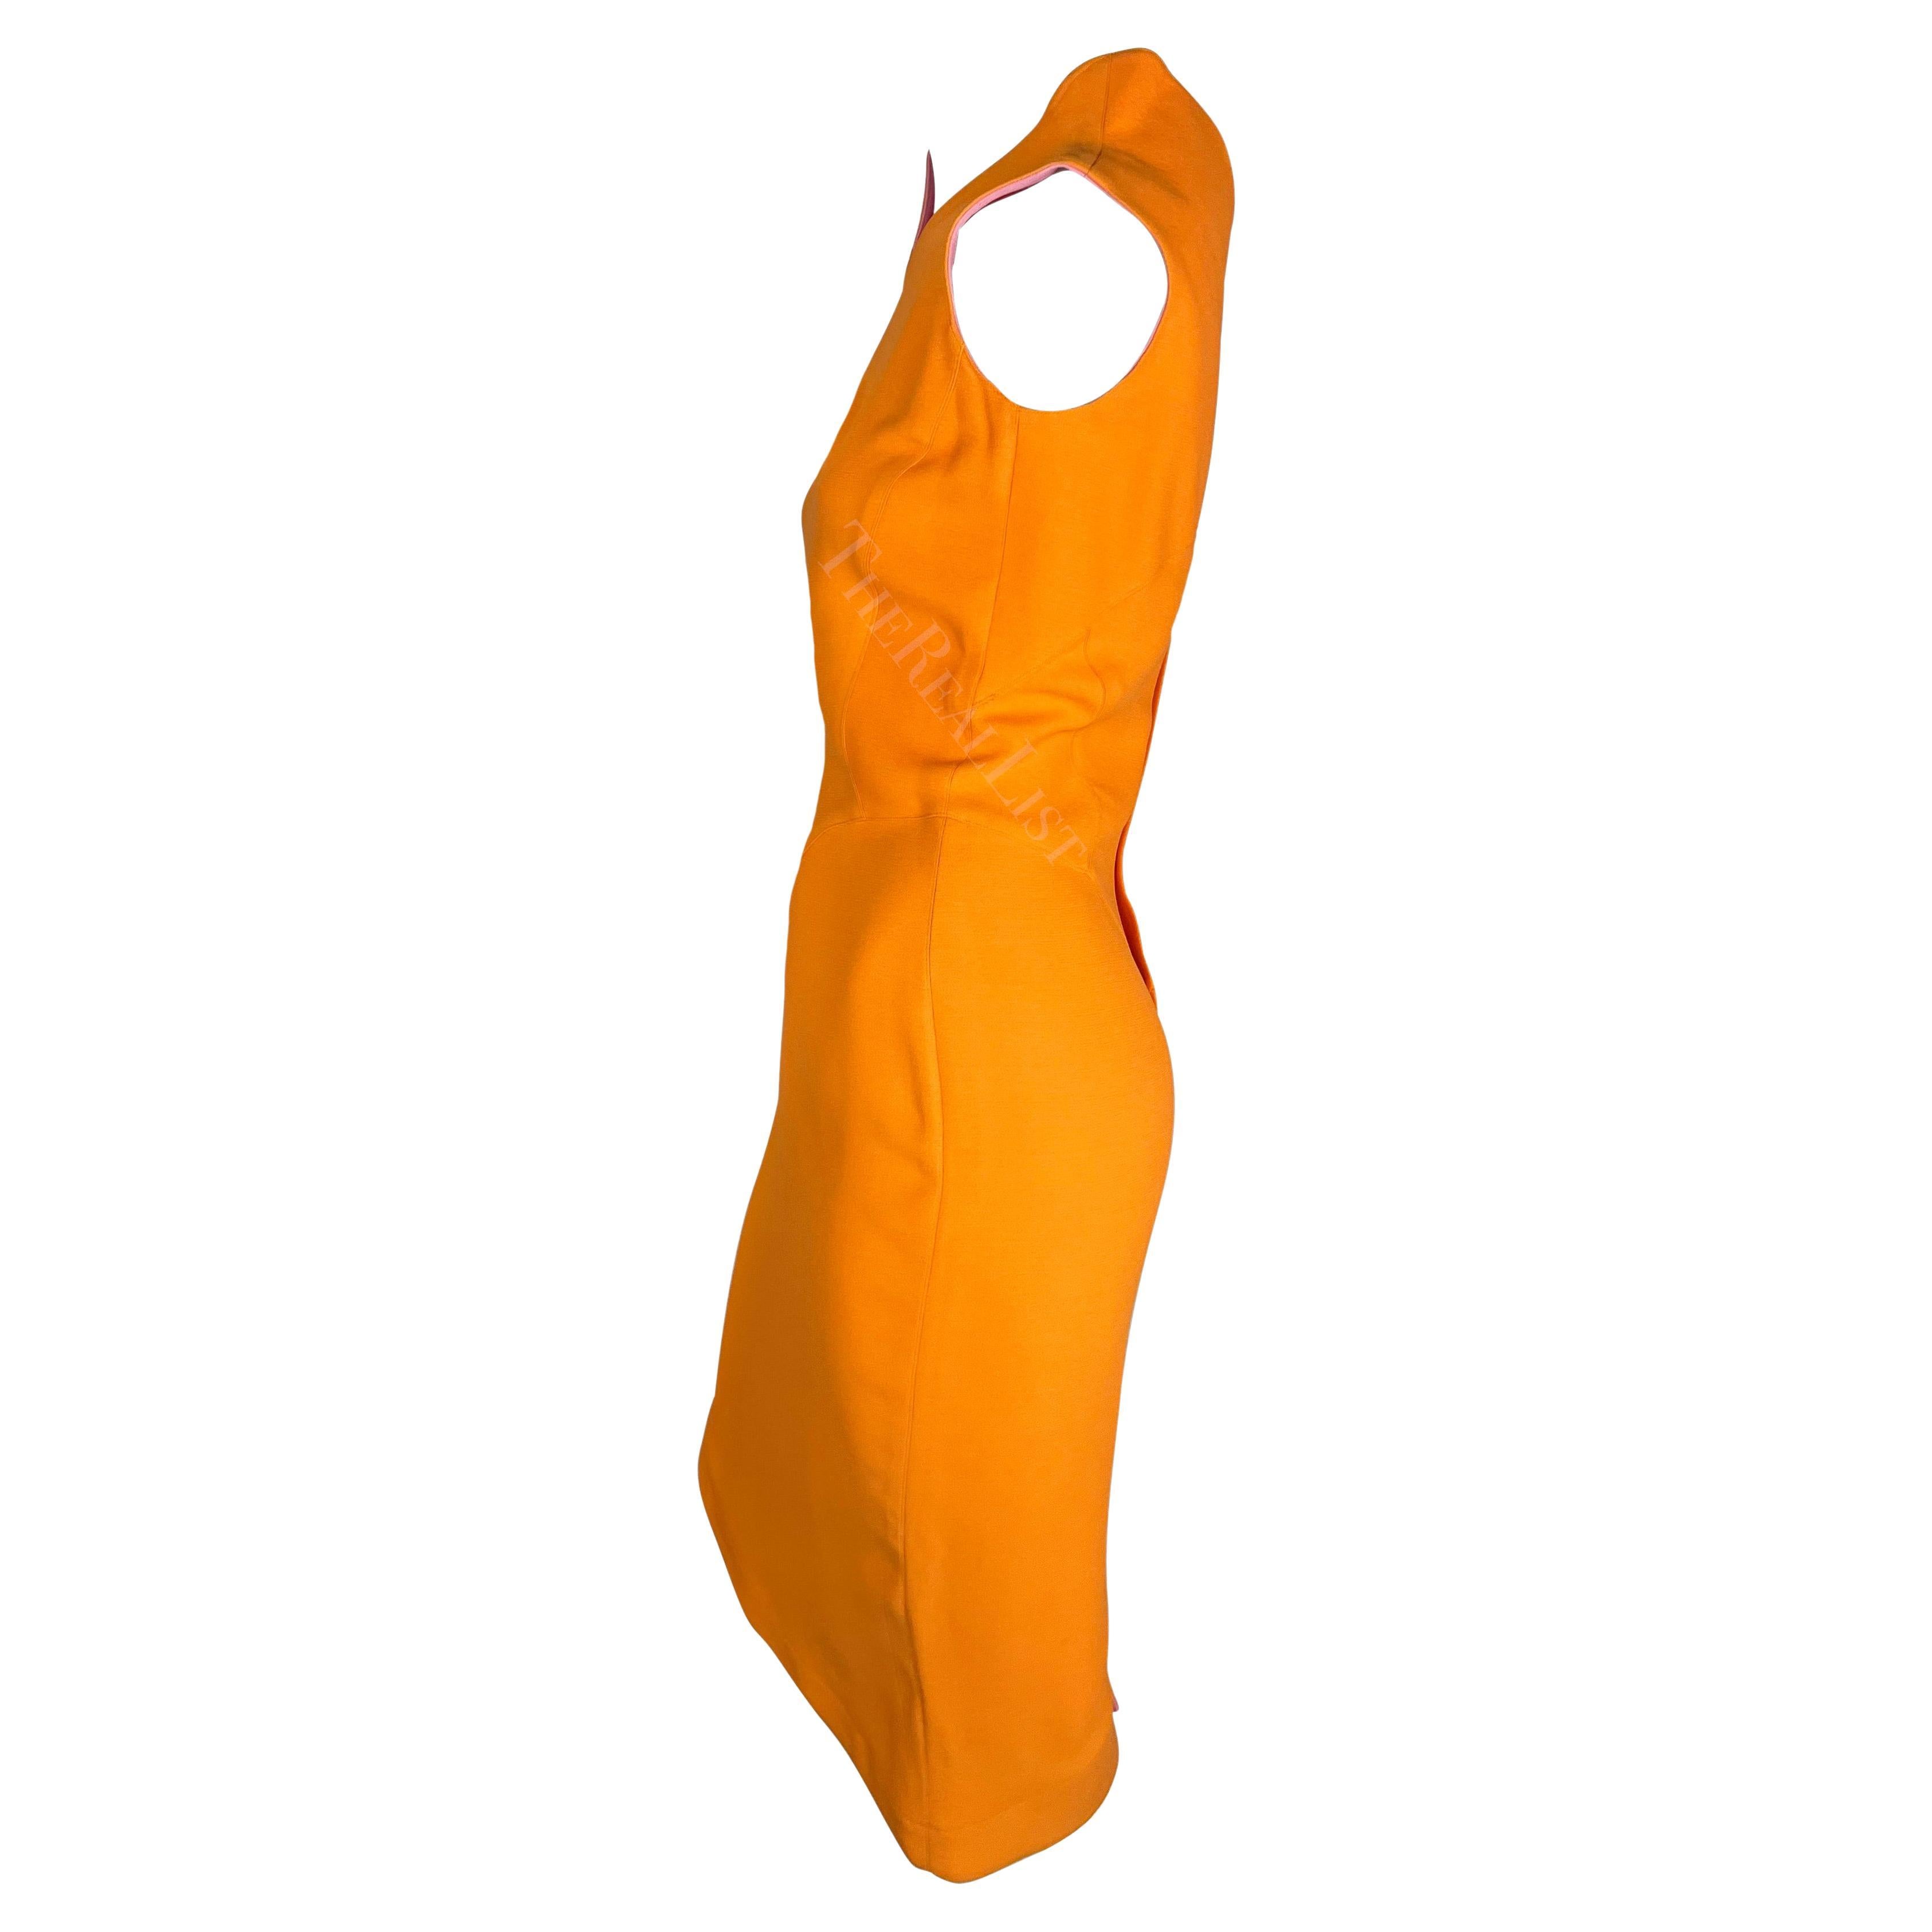 S/S 1988 Thierry Mugler Runway Ad Orange One Sleeve Sculptural Sahara Dress For Sale 2